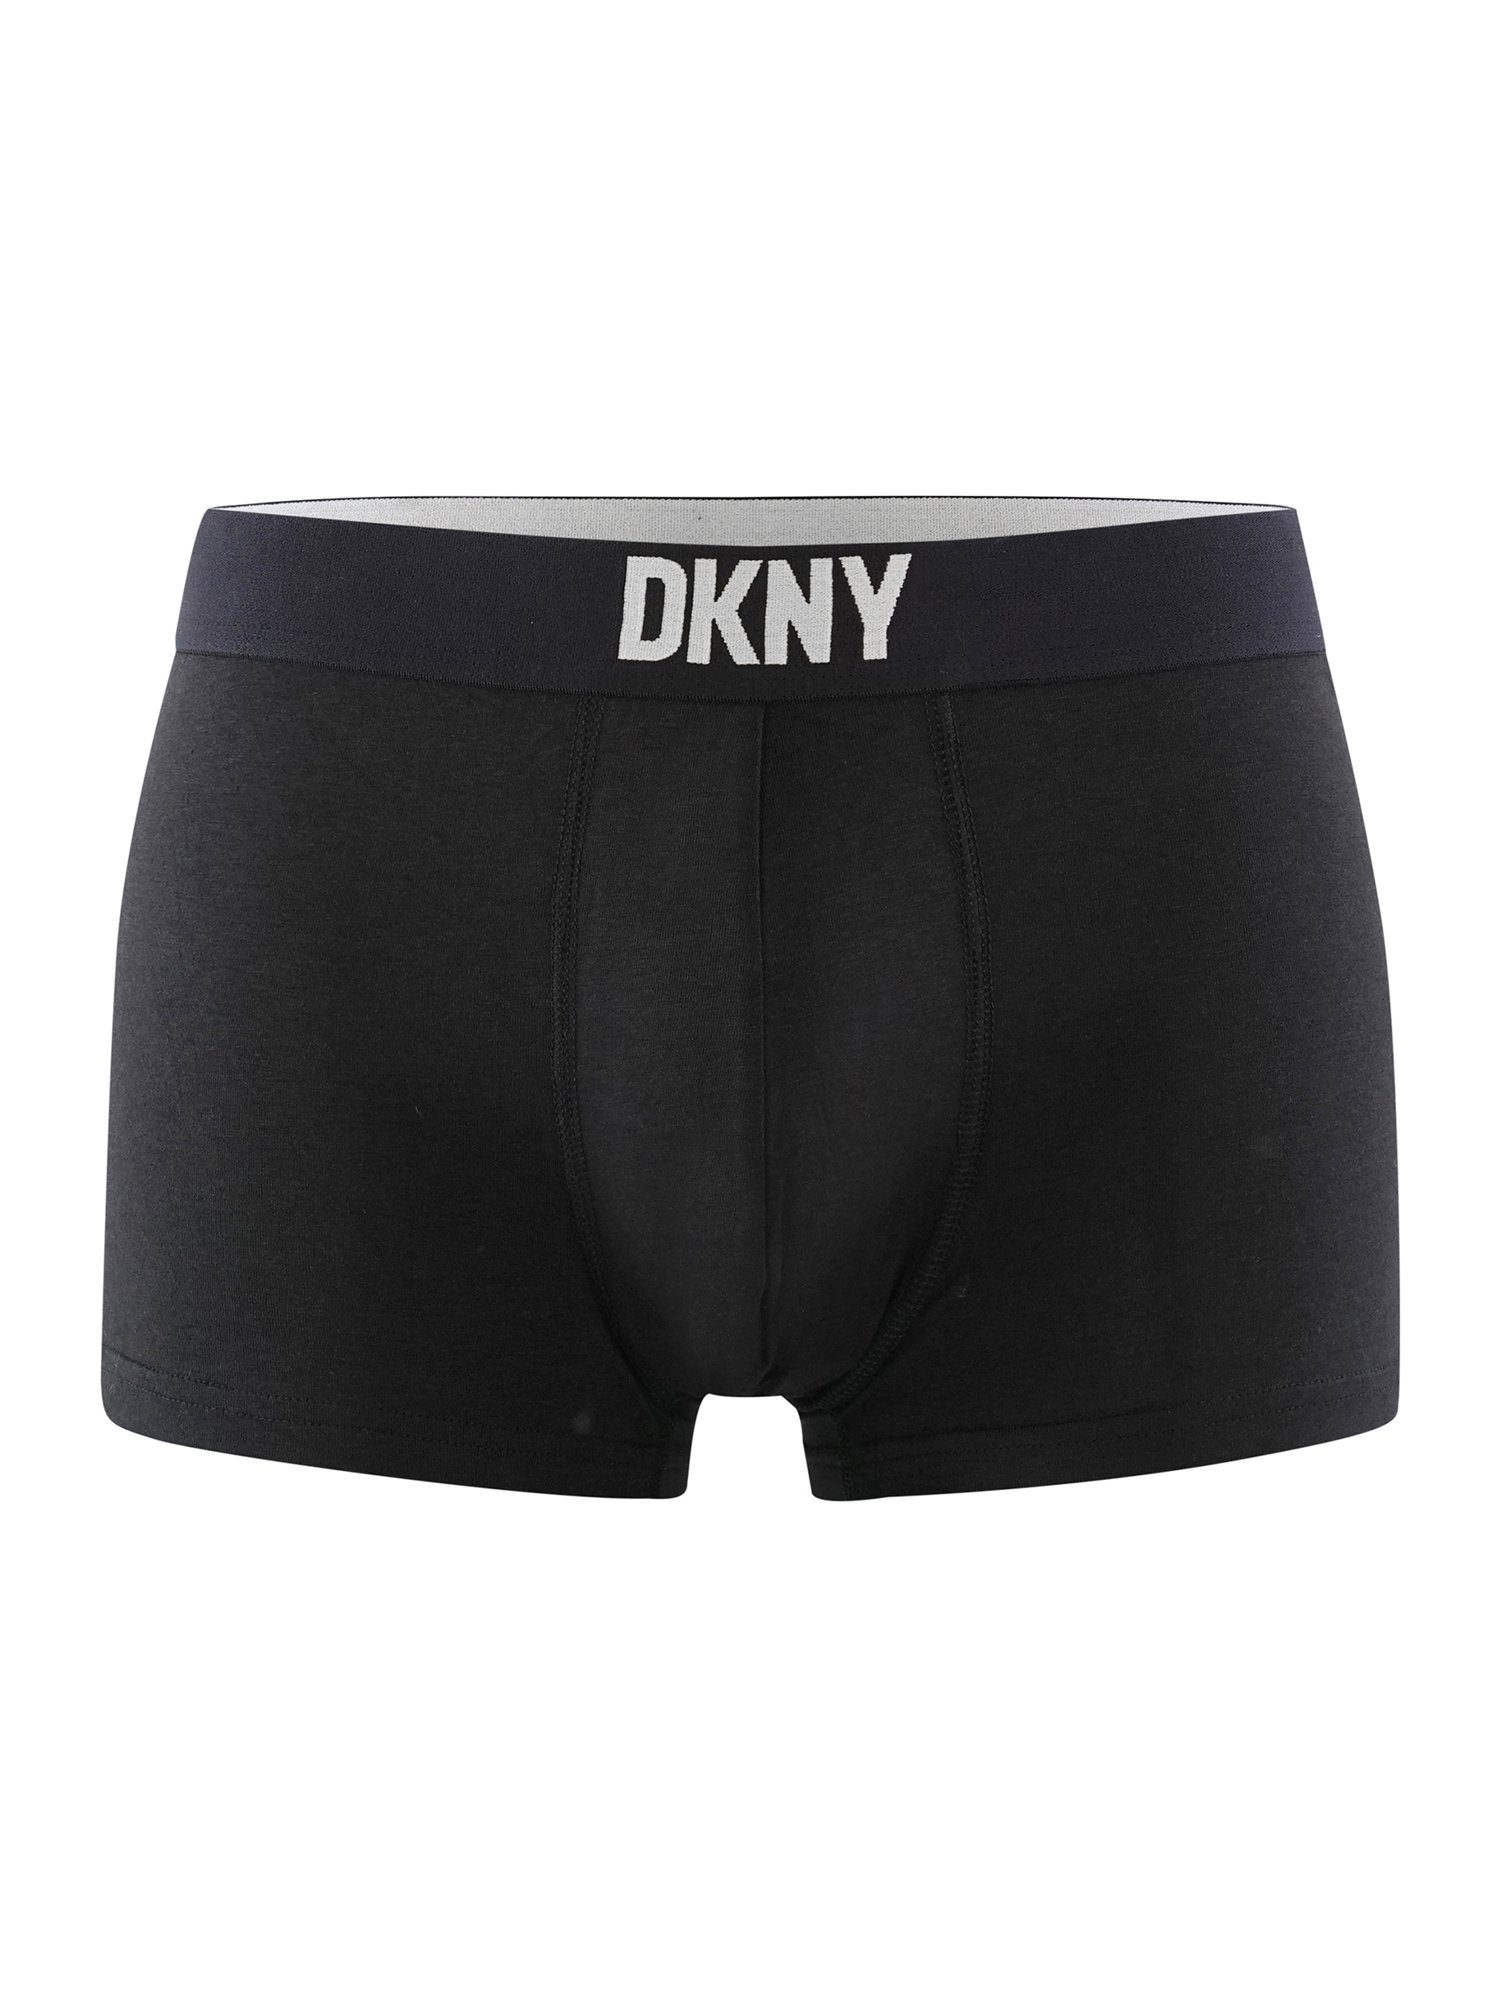 (6-St) männer NEW DKNY unterhose Trunk boxershort YORK